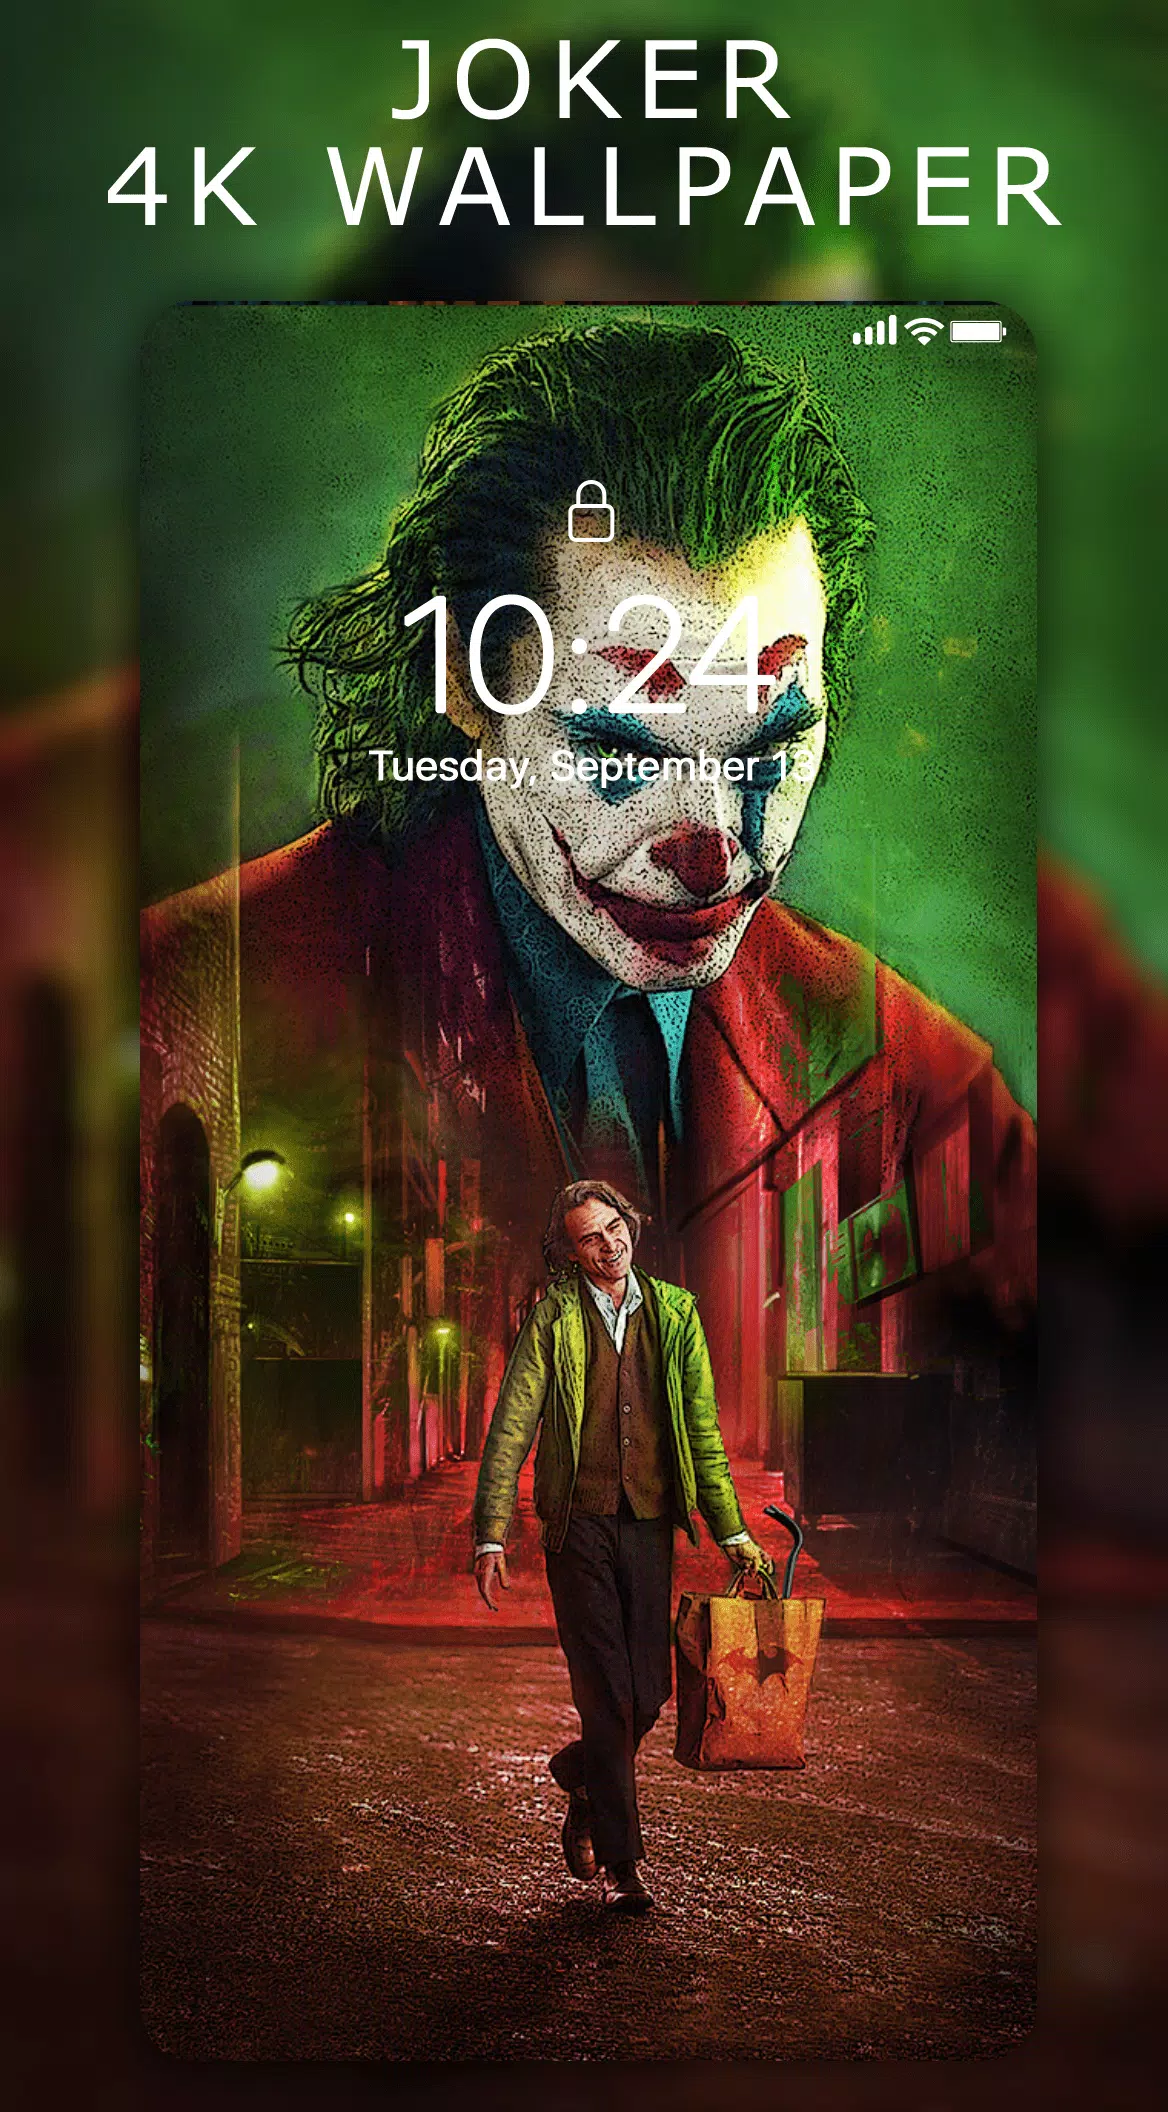 Joker Wallpaper 4k Ultra Hd Apk For Android Download